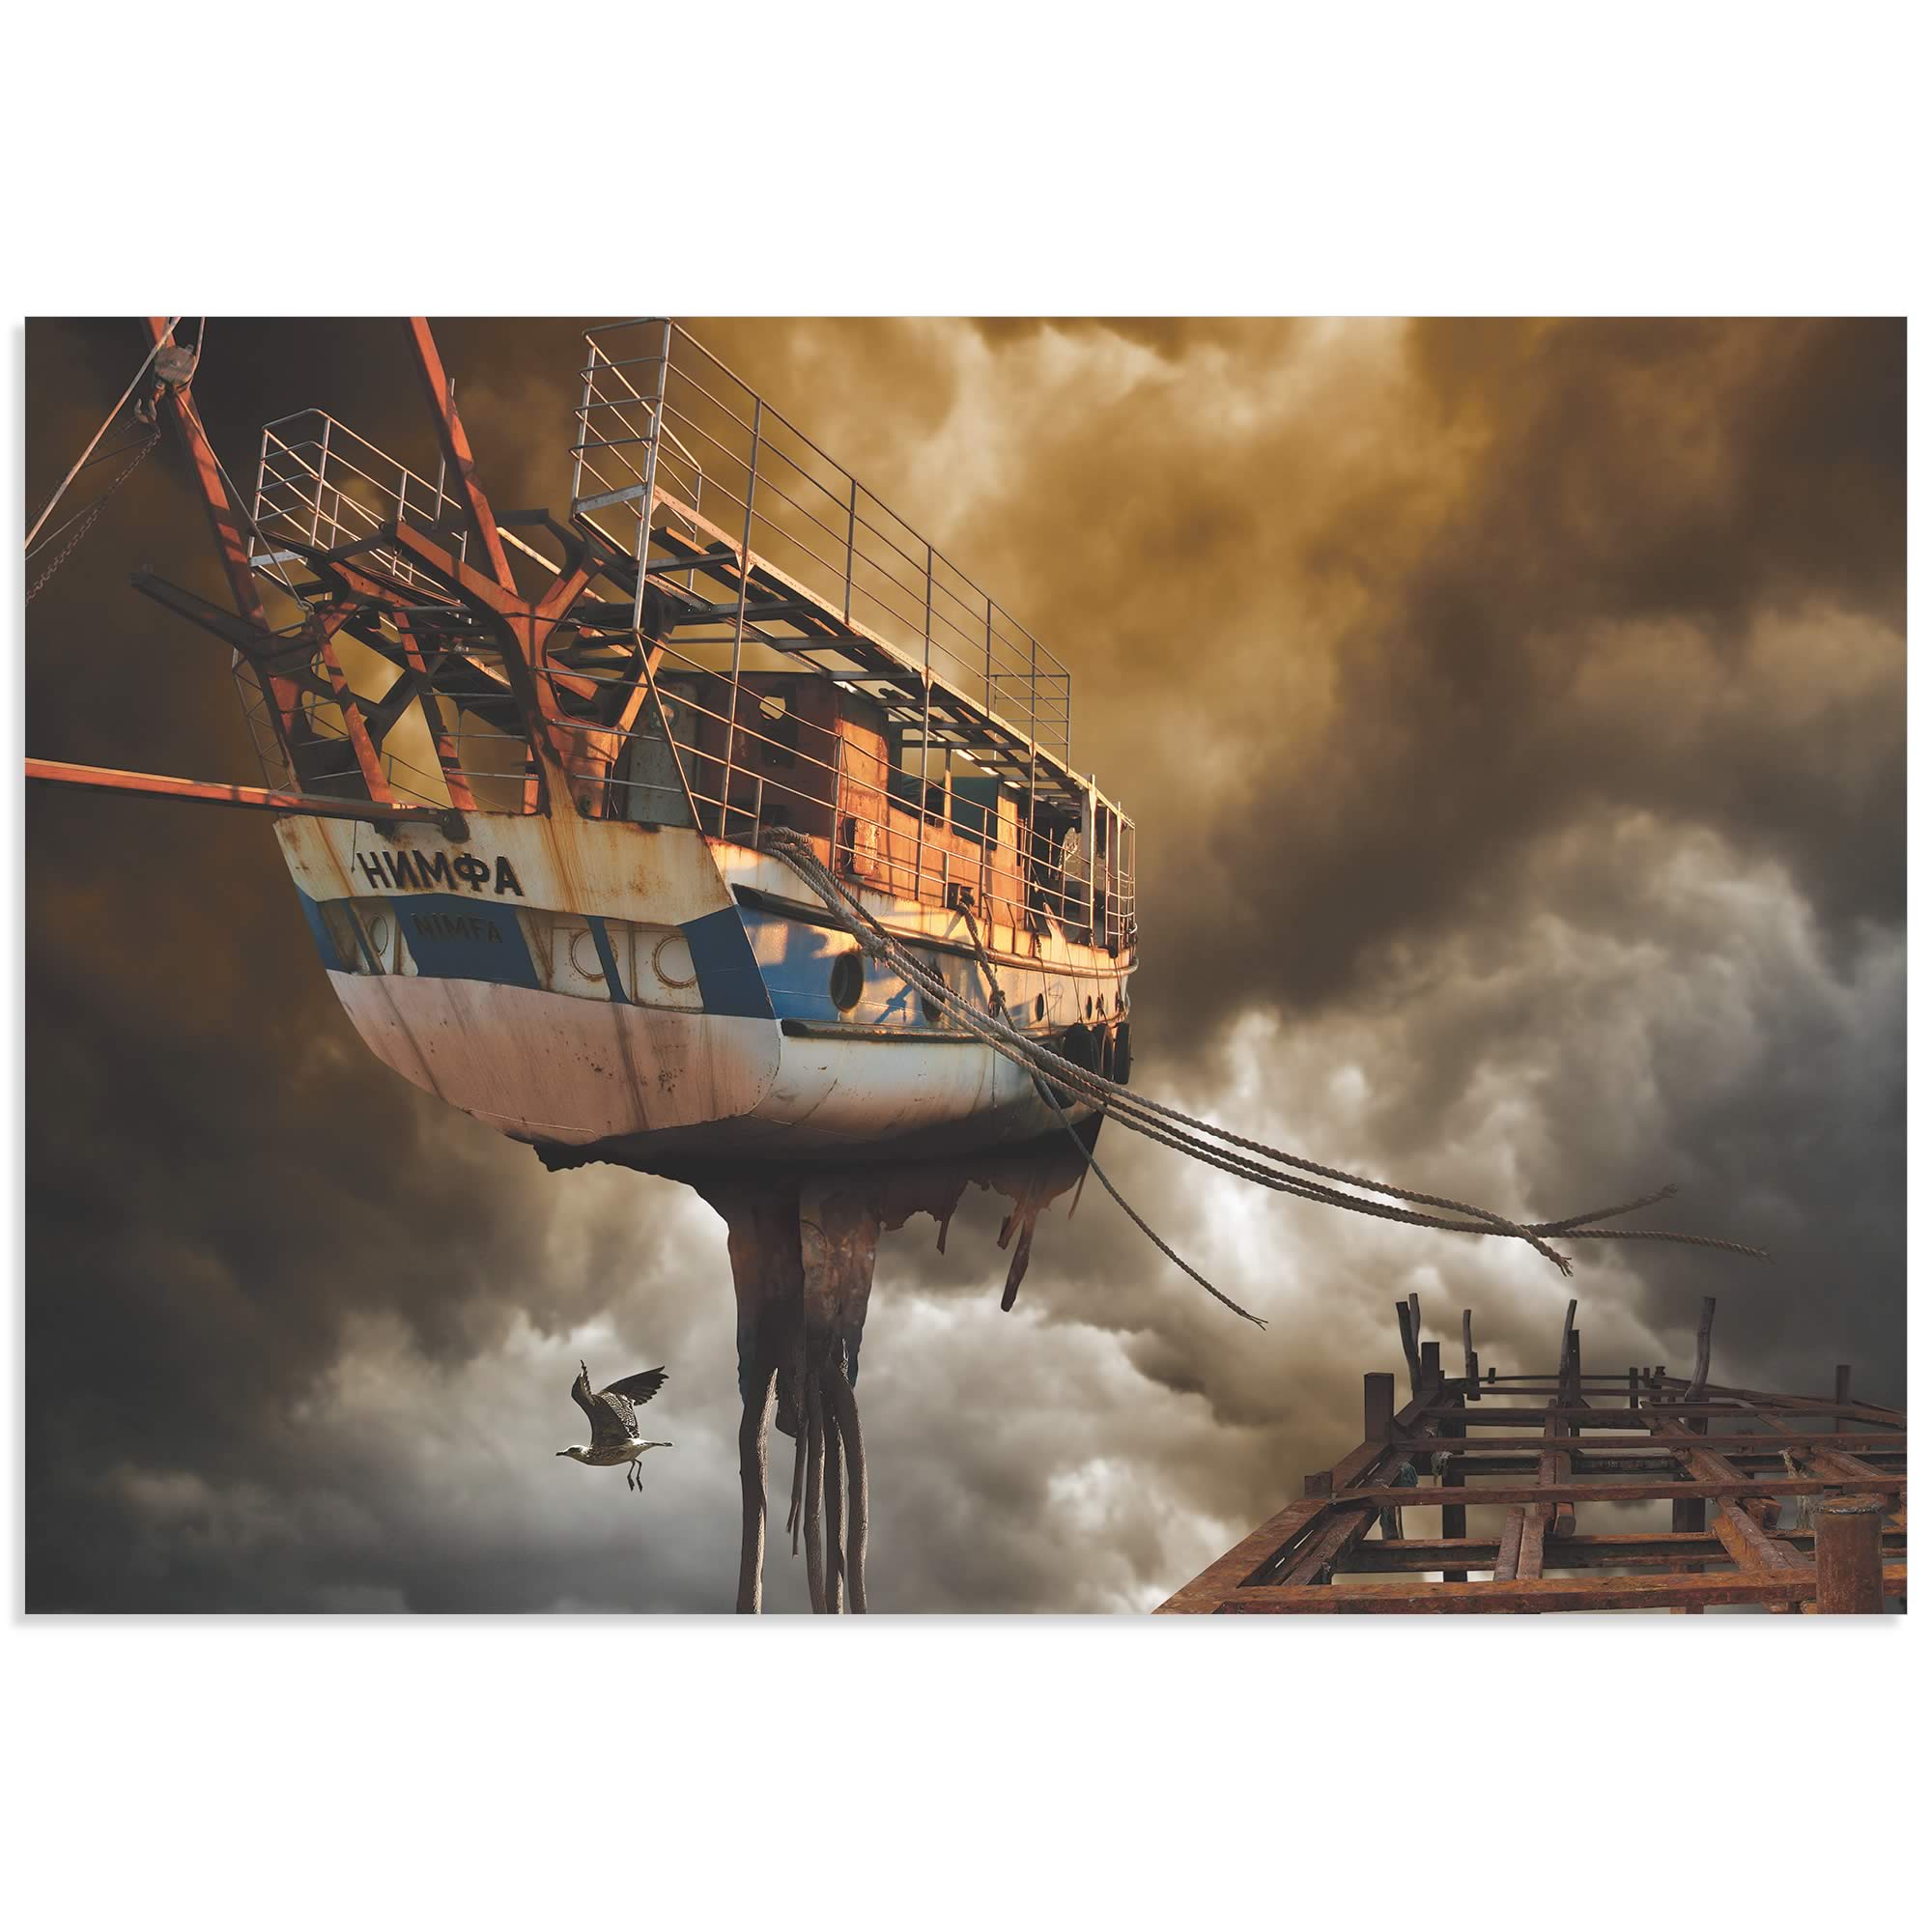 Nymph Ship by Radoslav Penchev - Digital Graphic Art on Metal or Acrylic